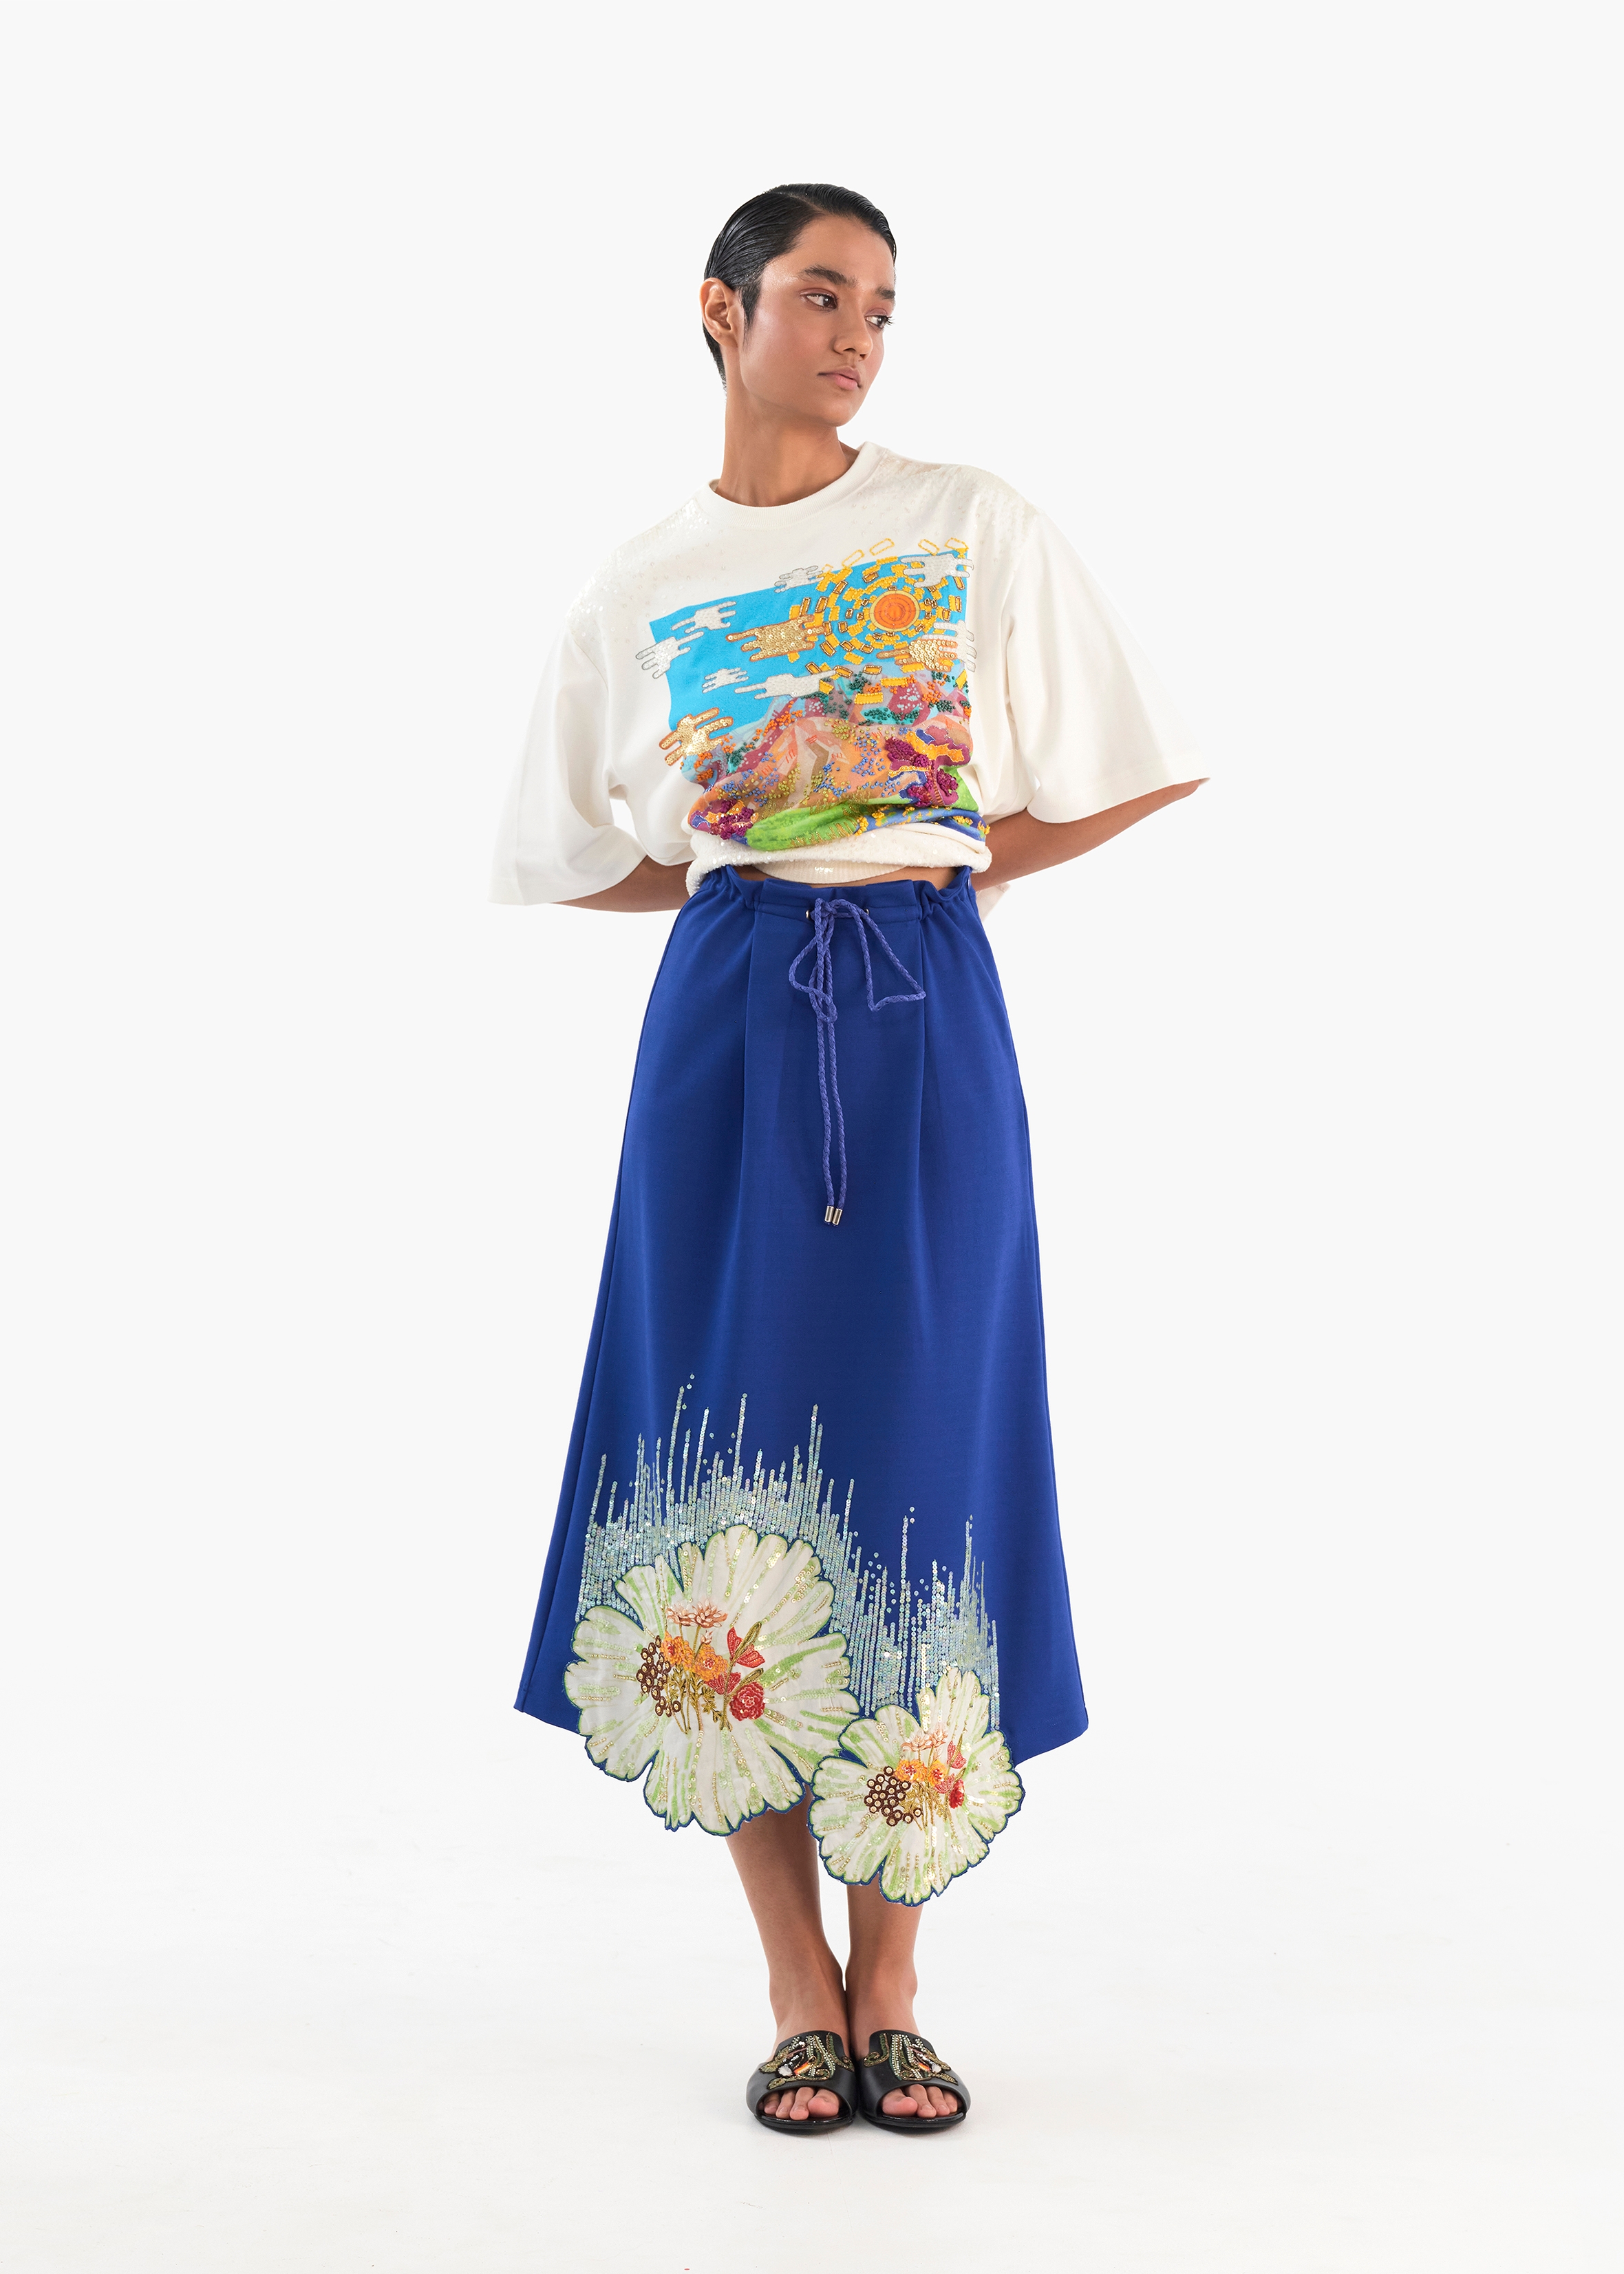 Carnation jersey skirt